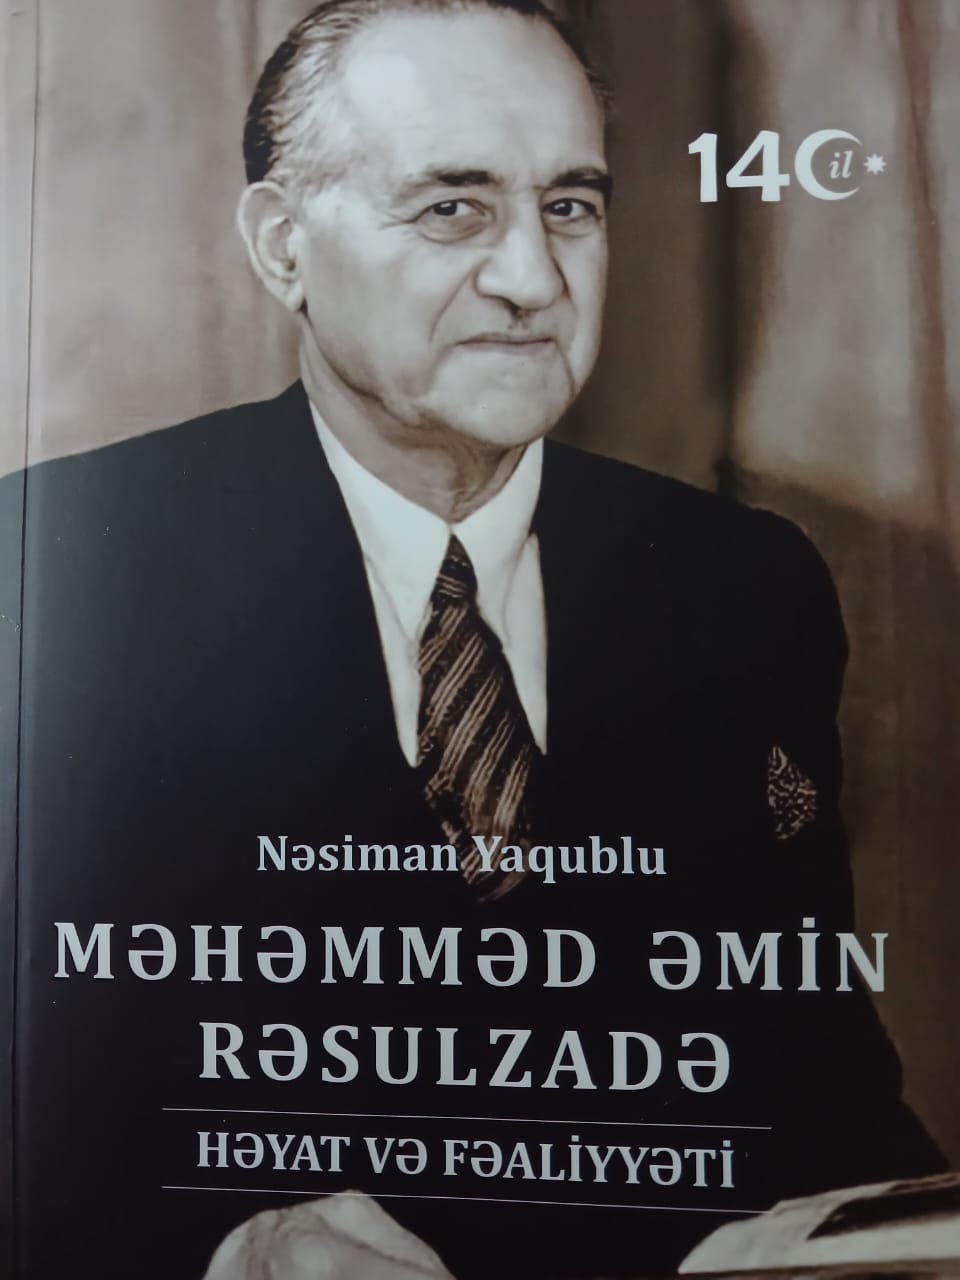 Nasiman Yagublu's Book " Mahammad Amin Rasulzade: Life and Activities "  Published   